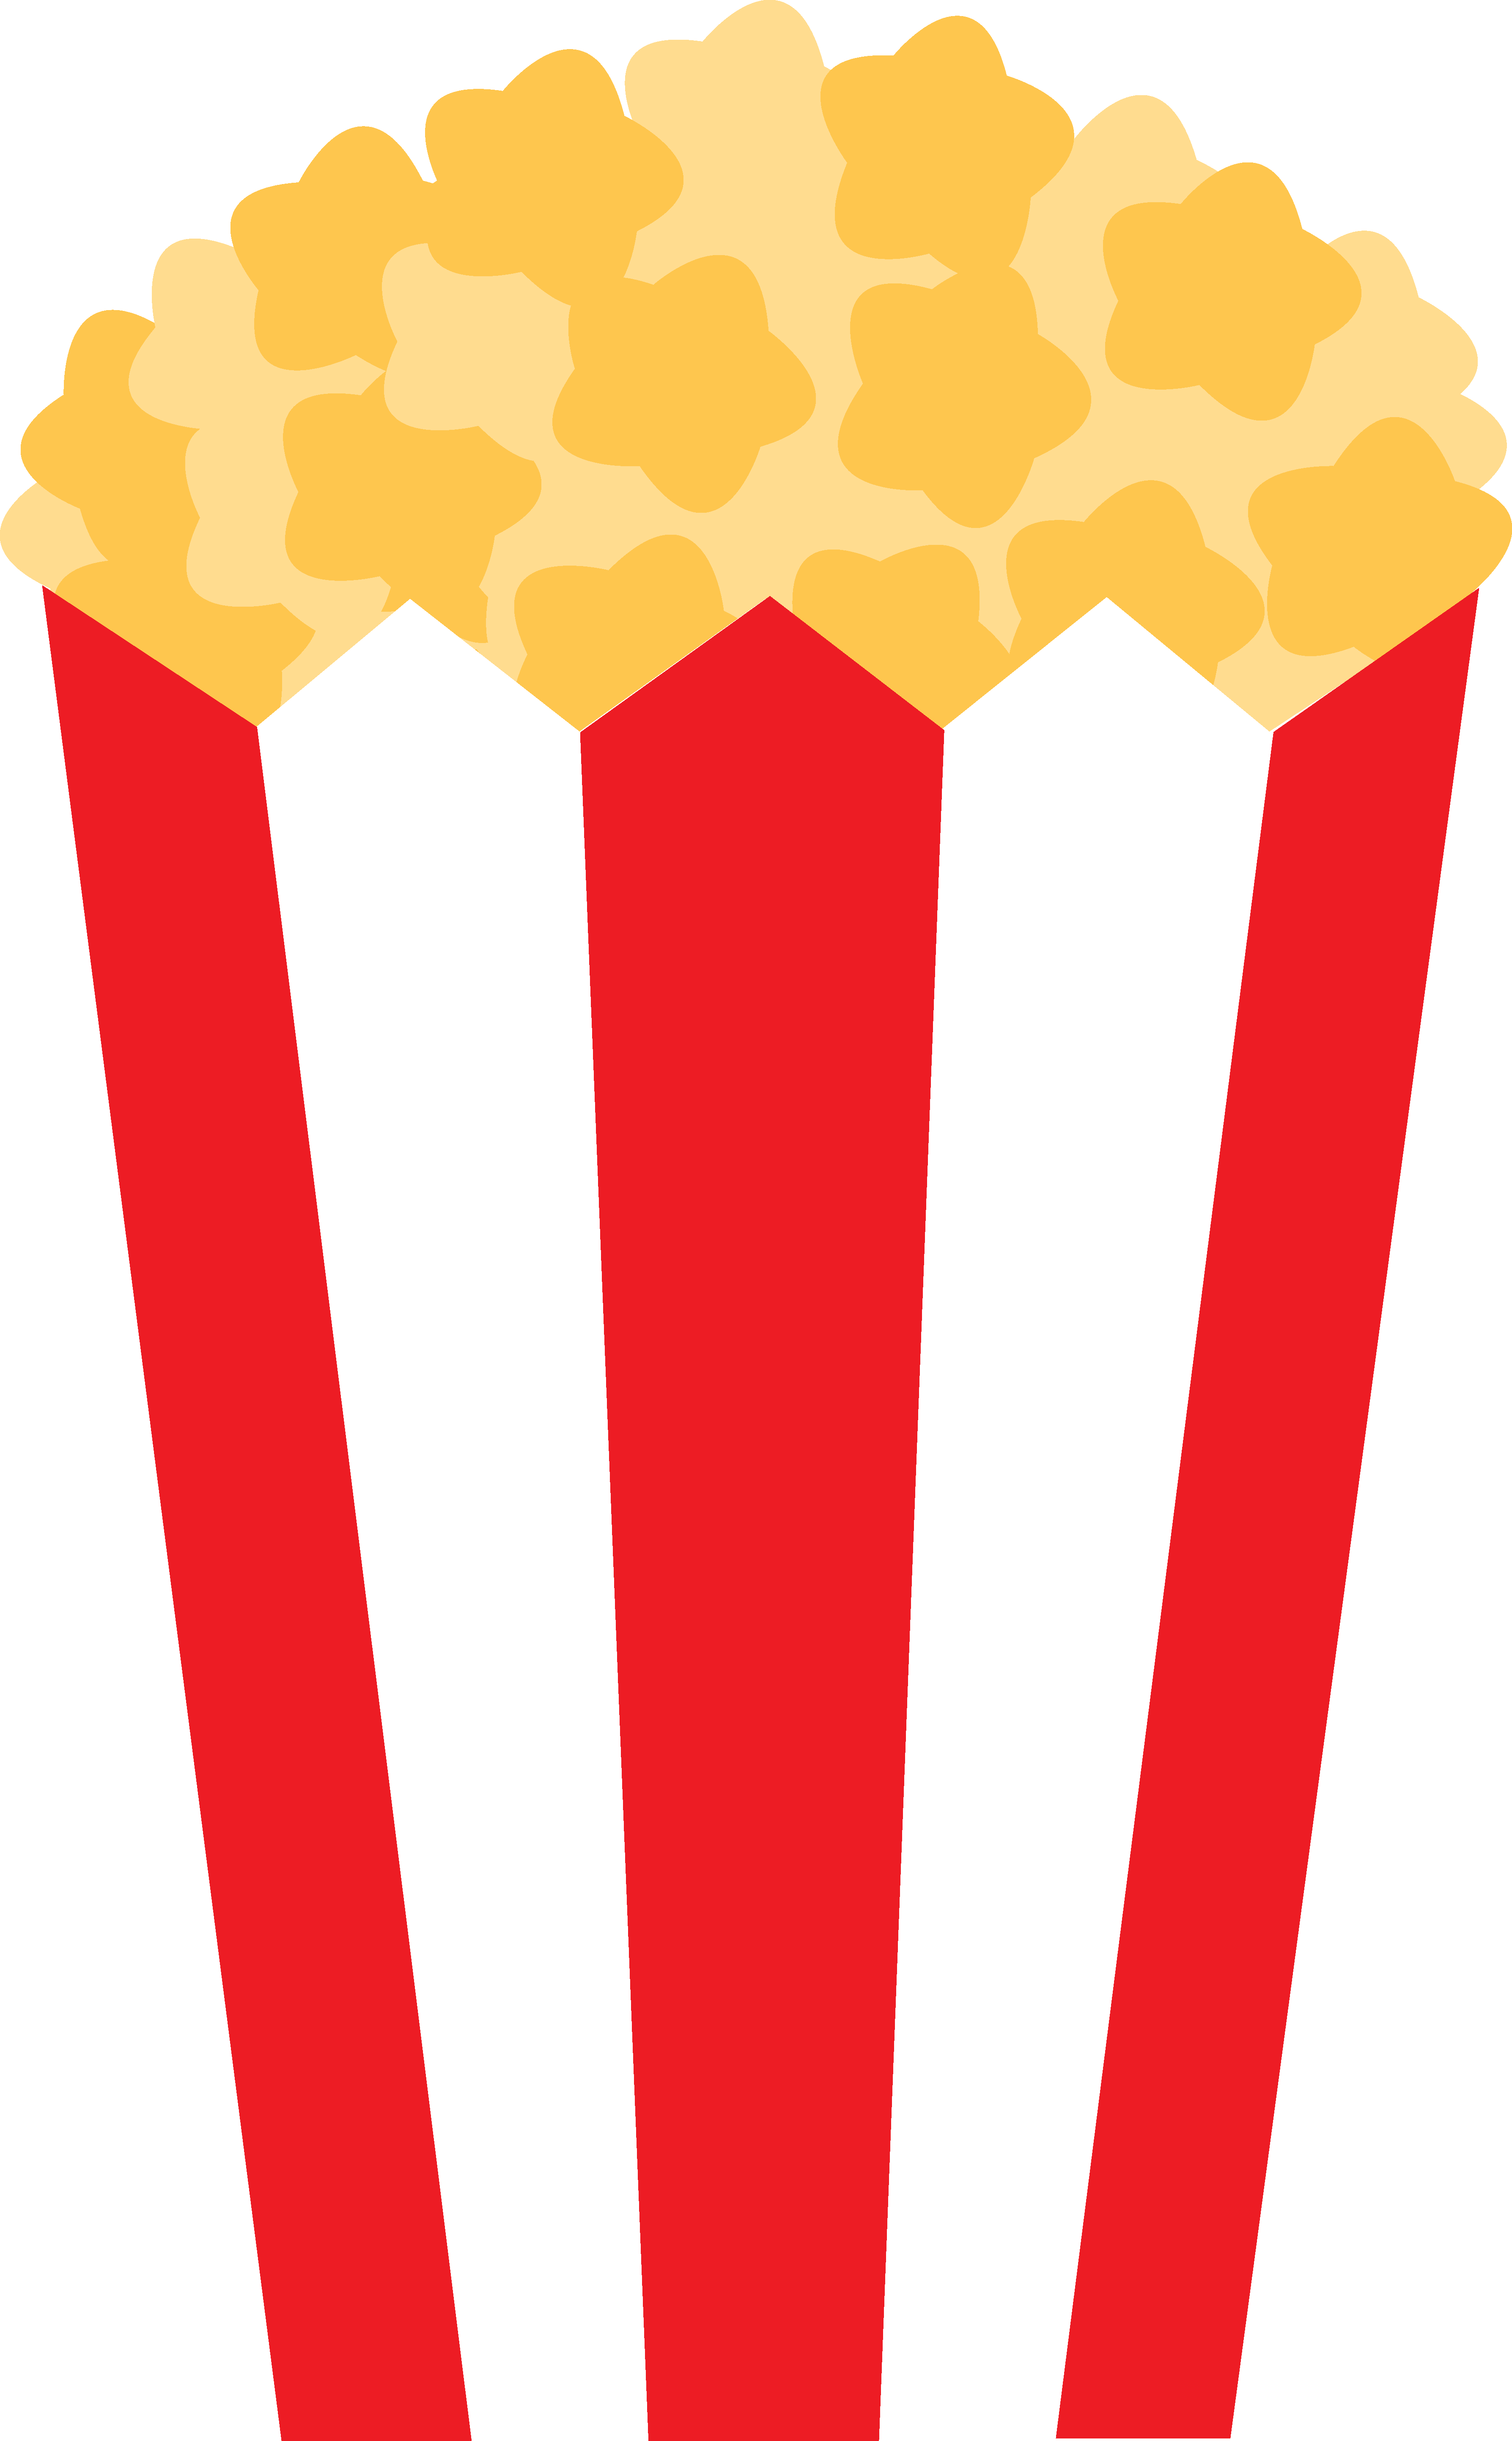 bag of popcorn png - Clip Art Library